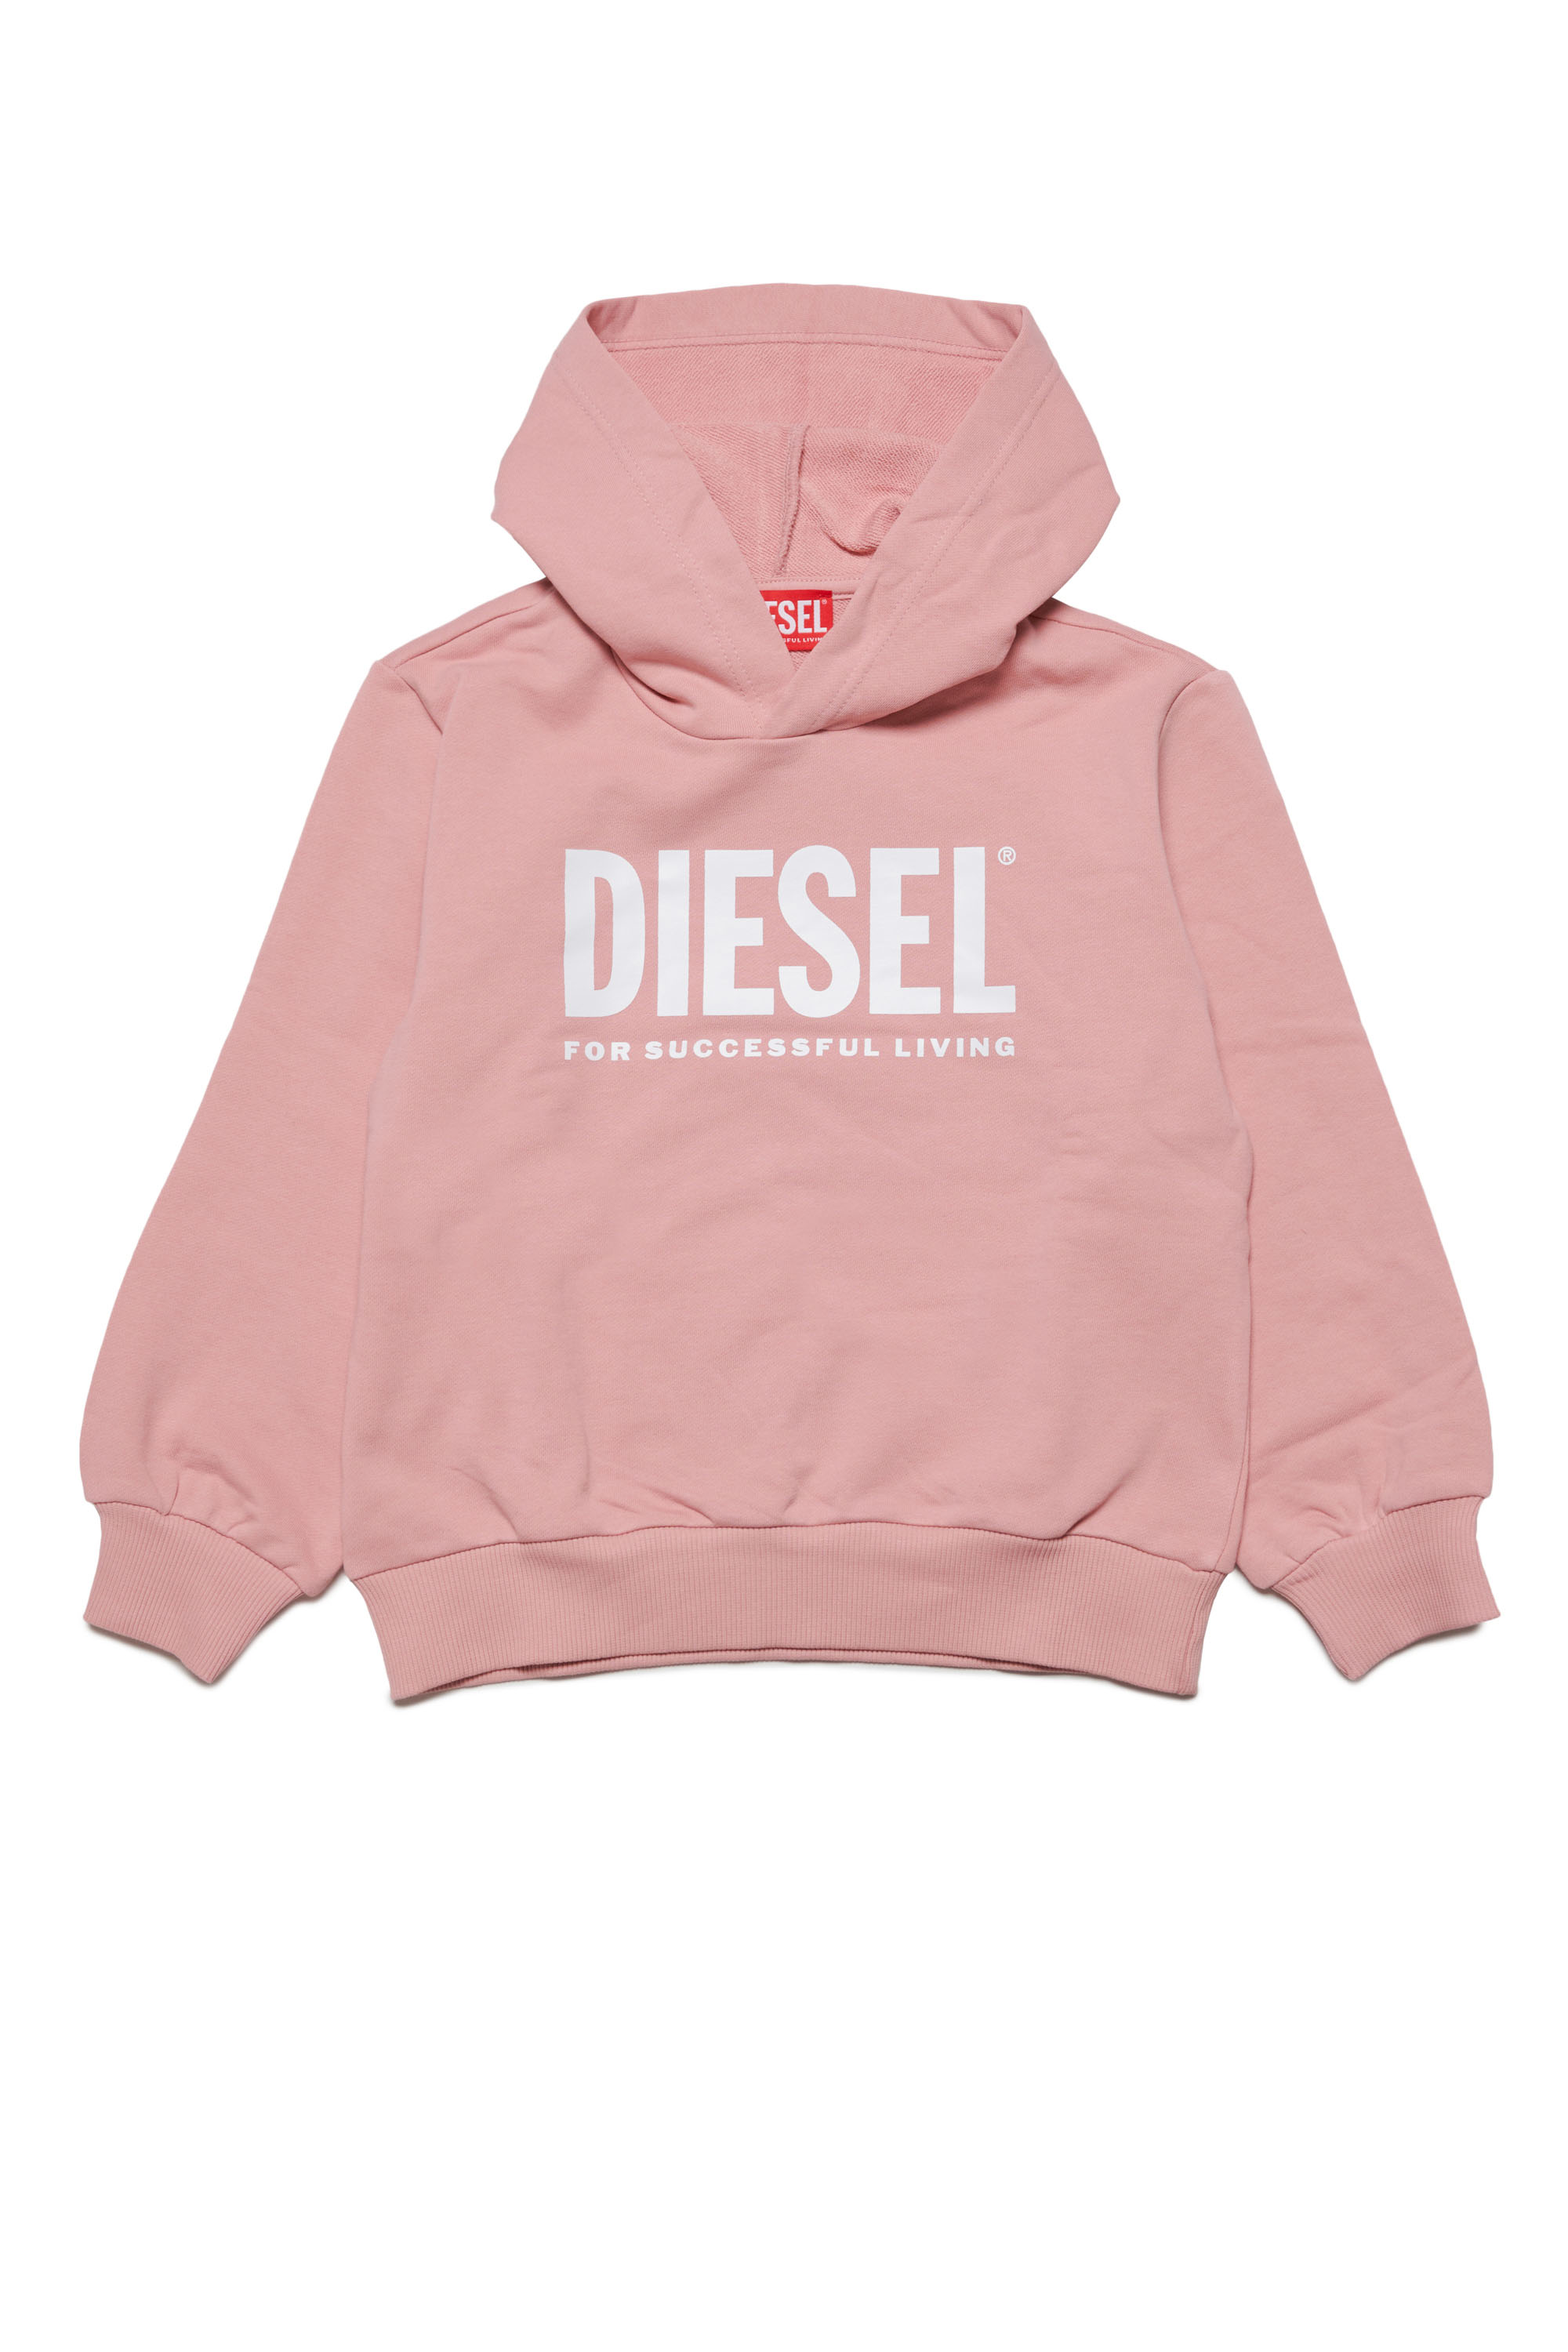 Diesel - LSFORT DI OVER HOOD, Pink - Image 1